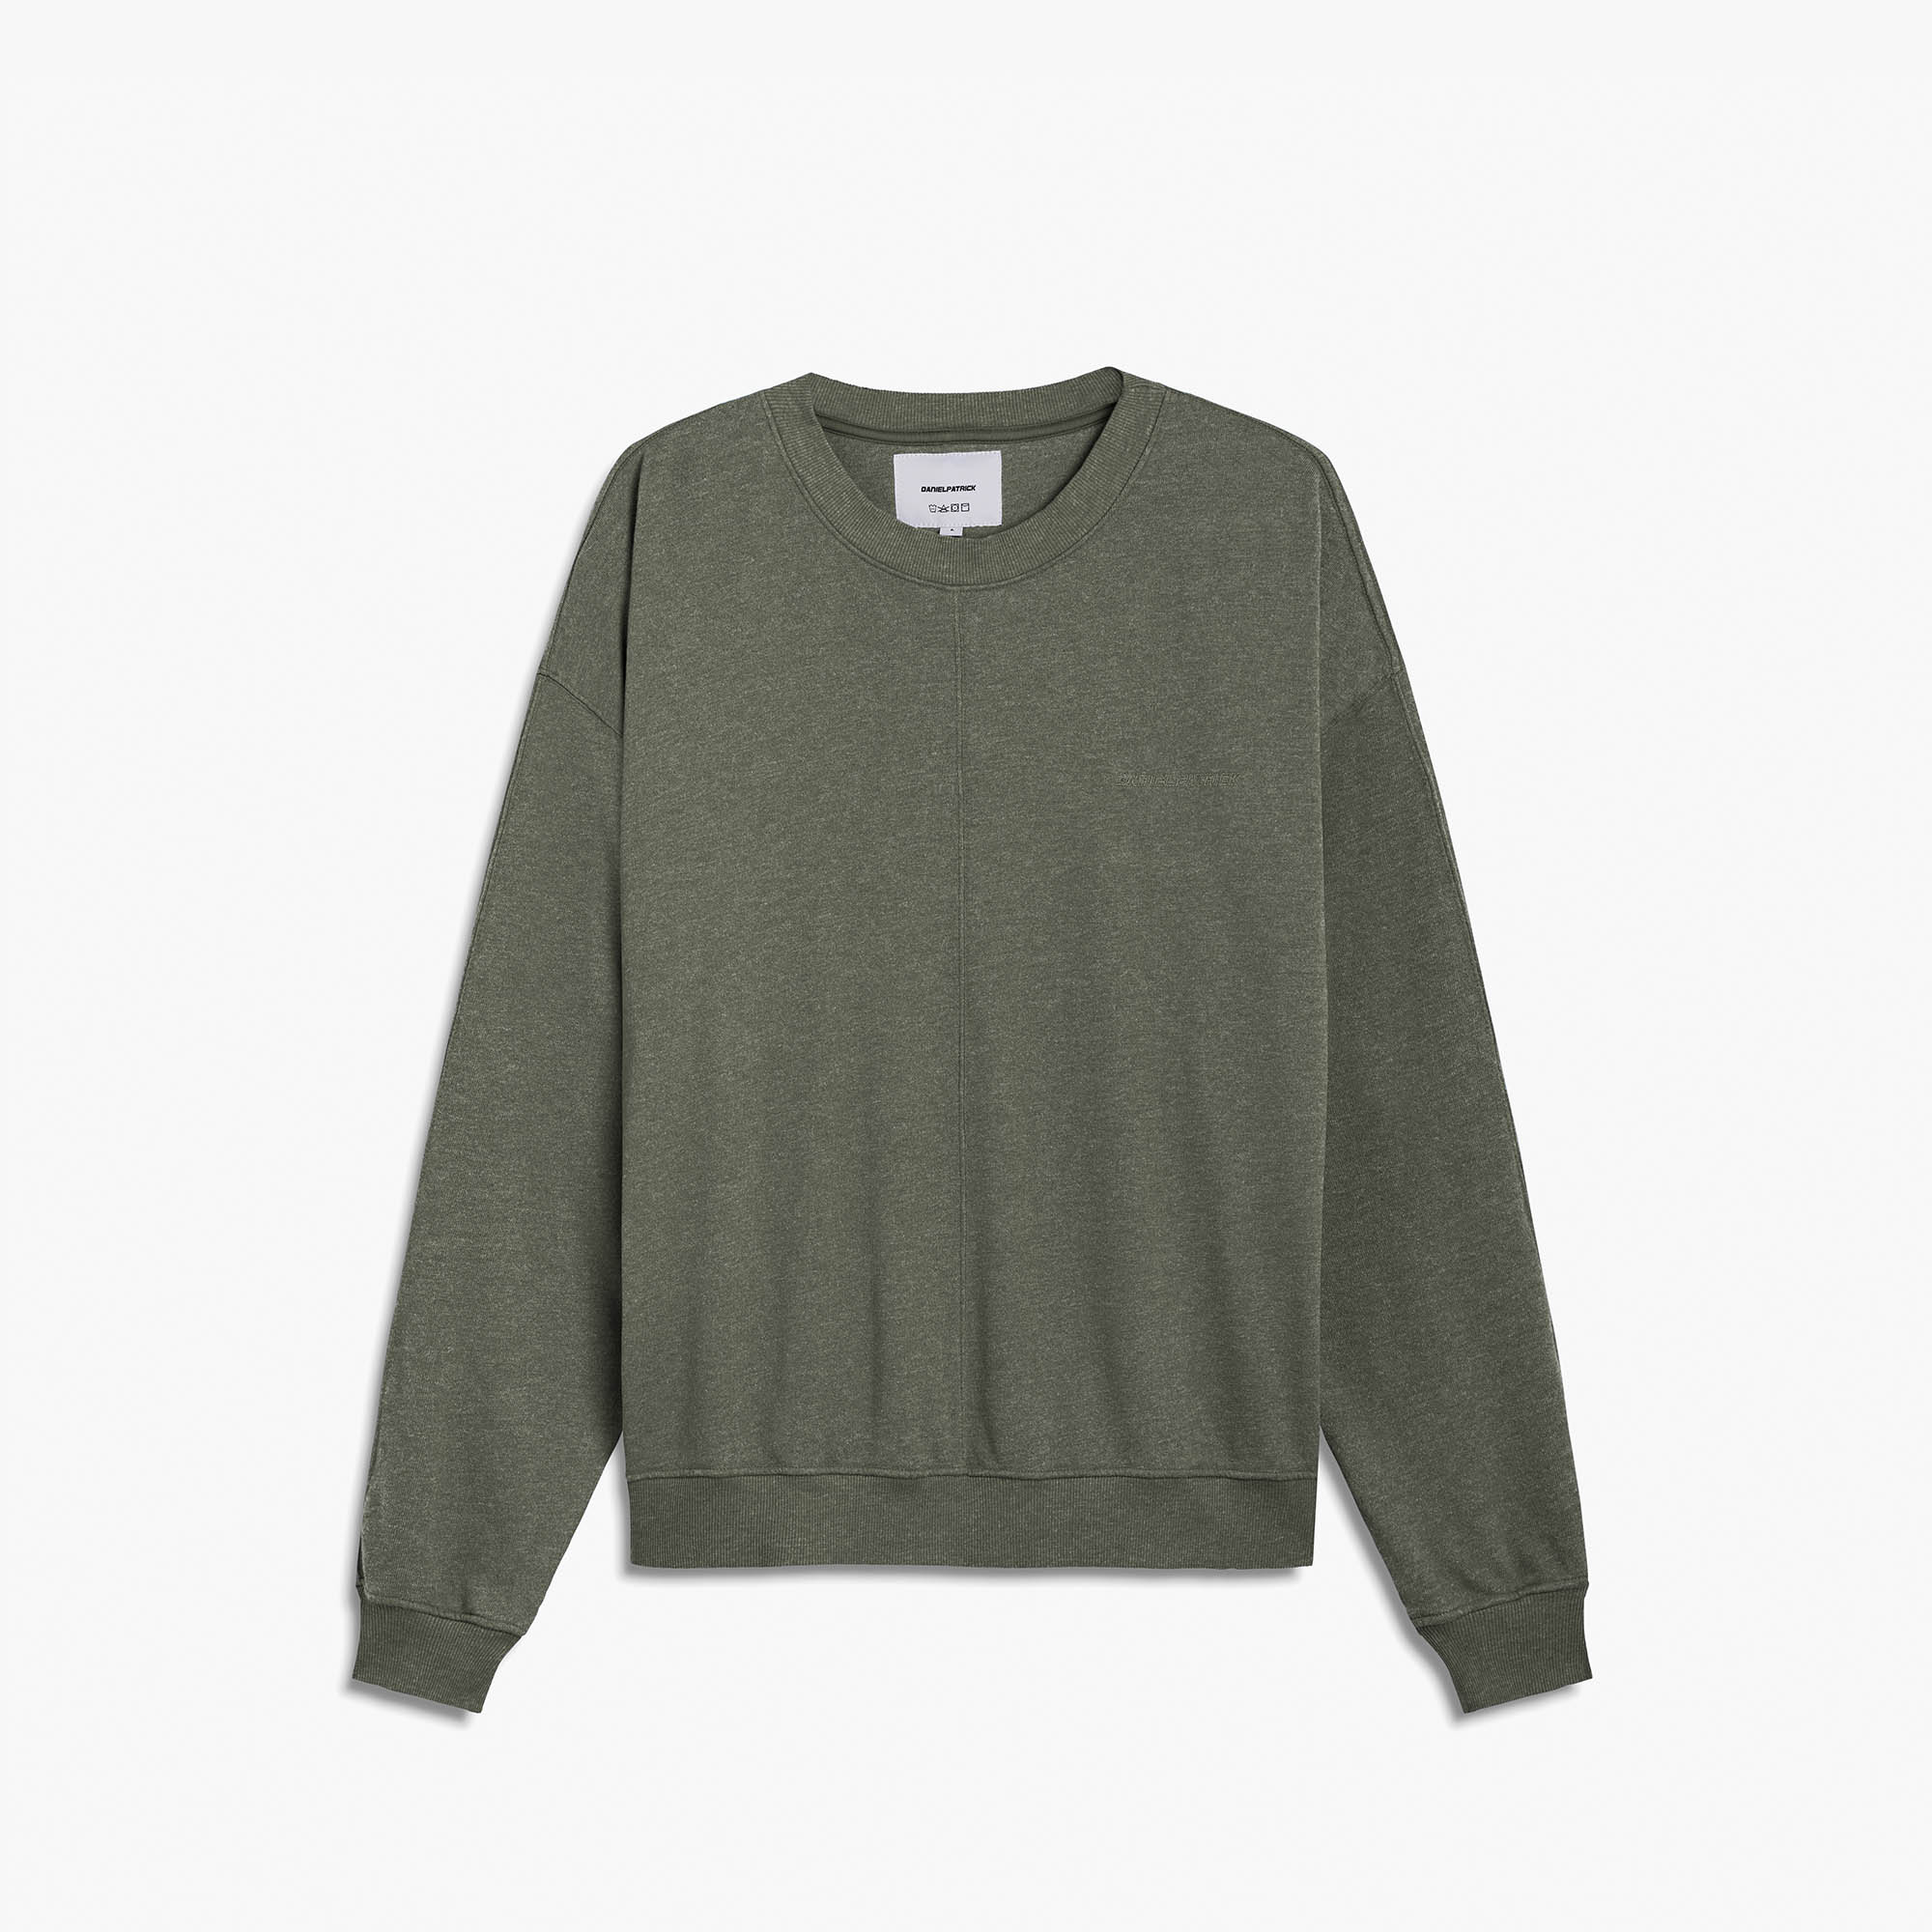 loop terry standard sweatshirt / washed olive heather